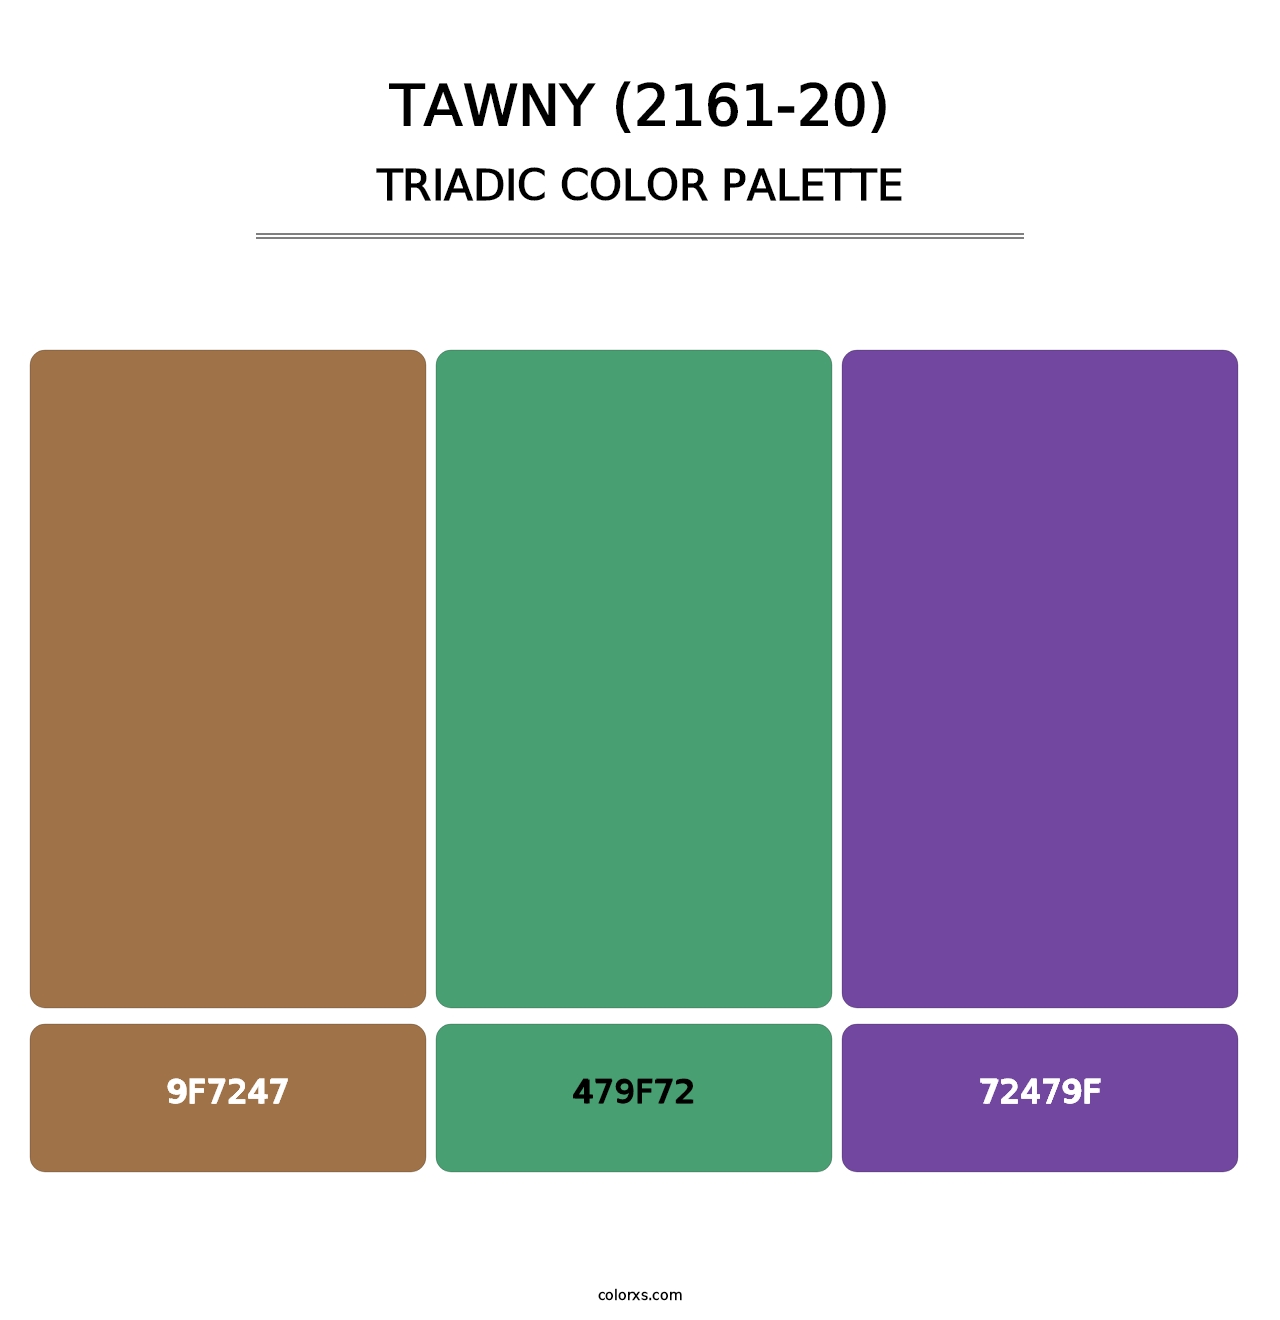 Tawny (2161-20) - Triadic Color Palette